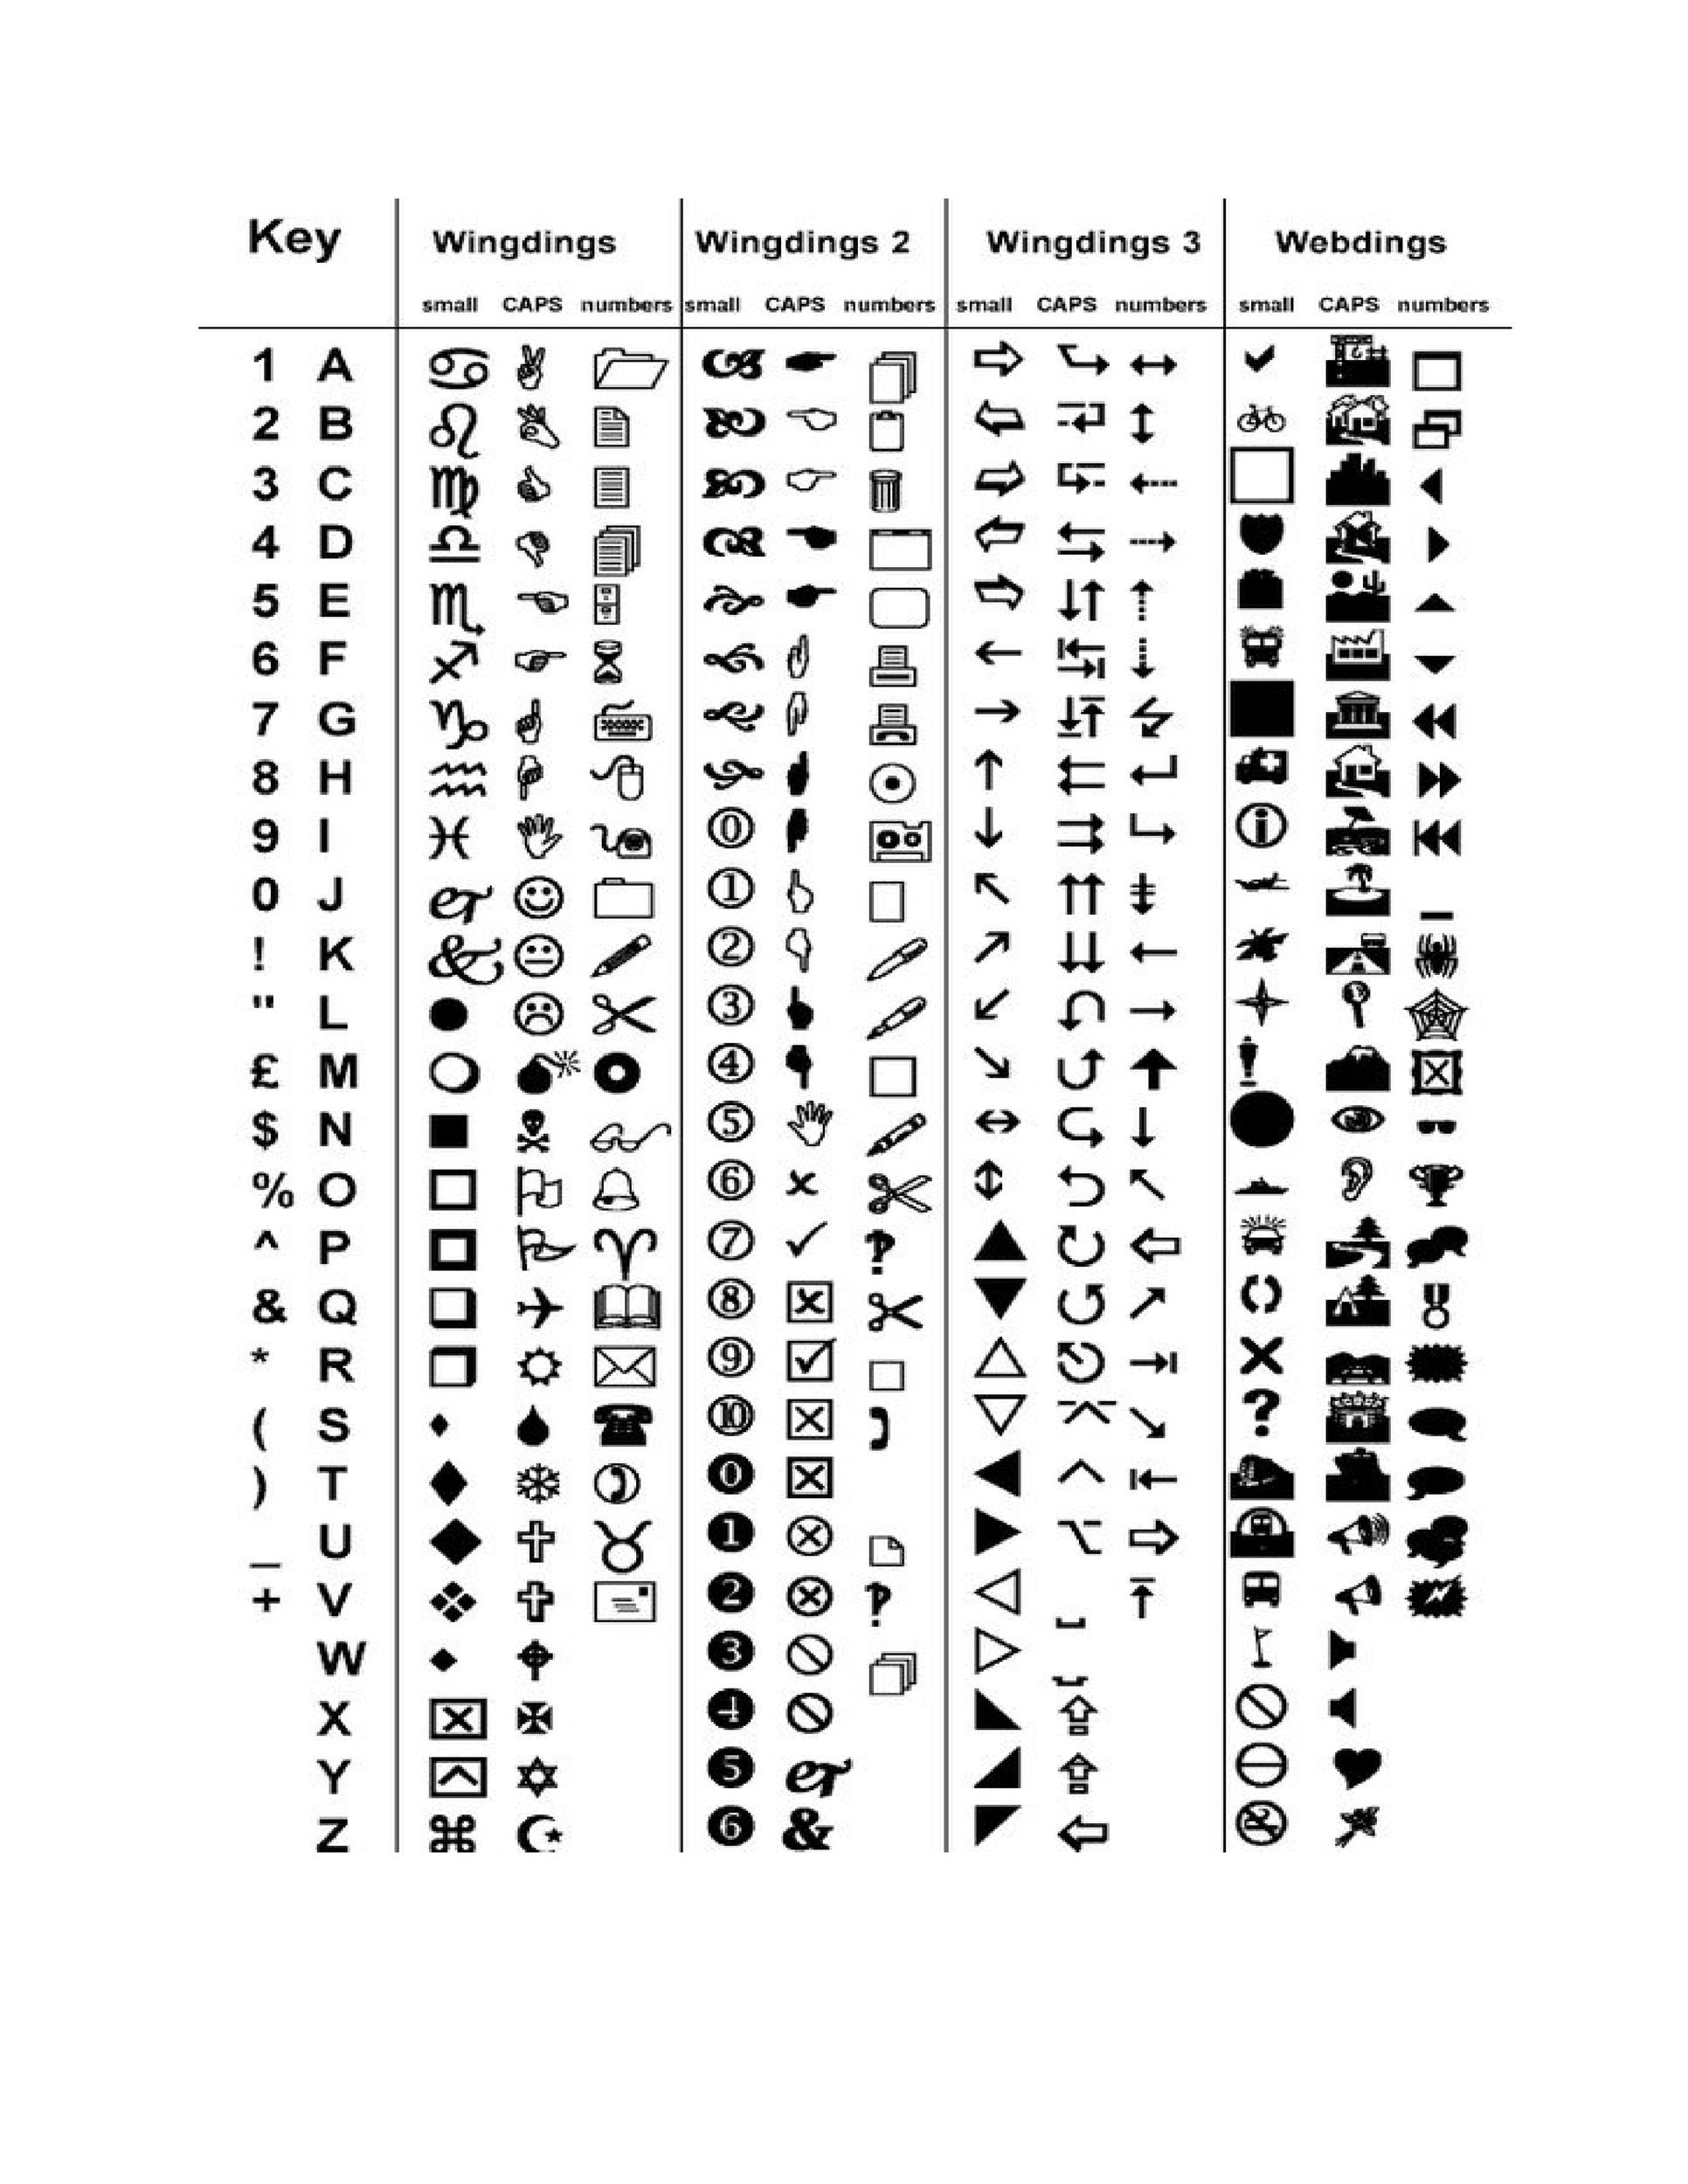 Wingdings Alphabet Chart